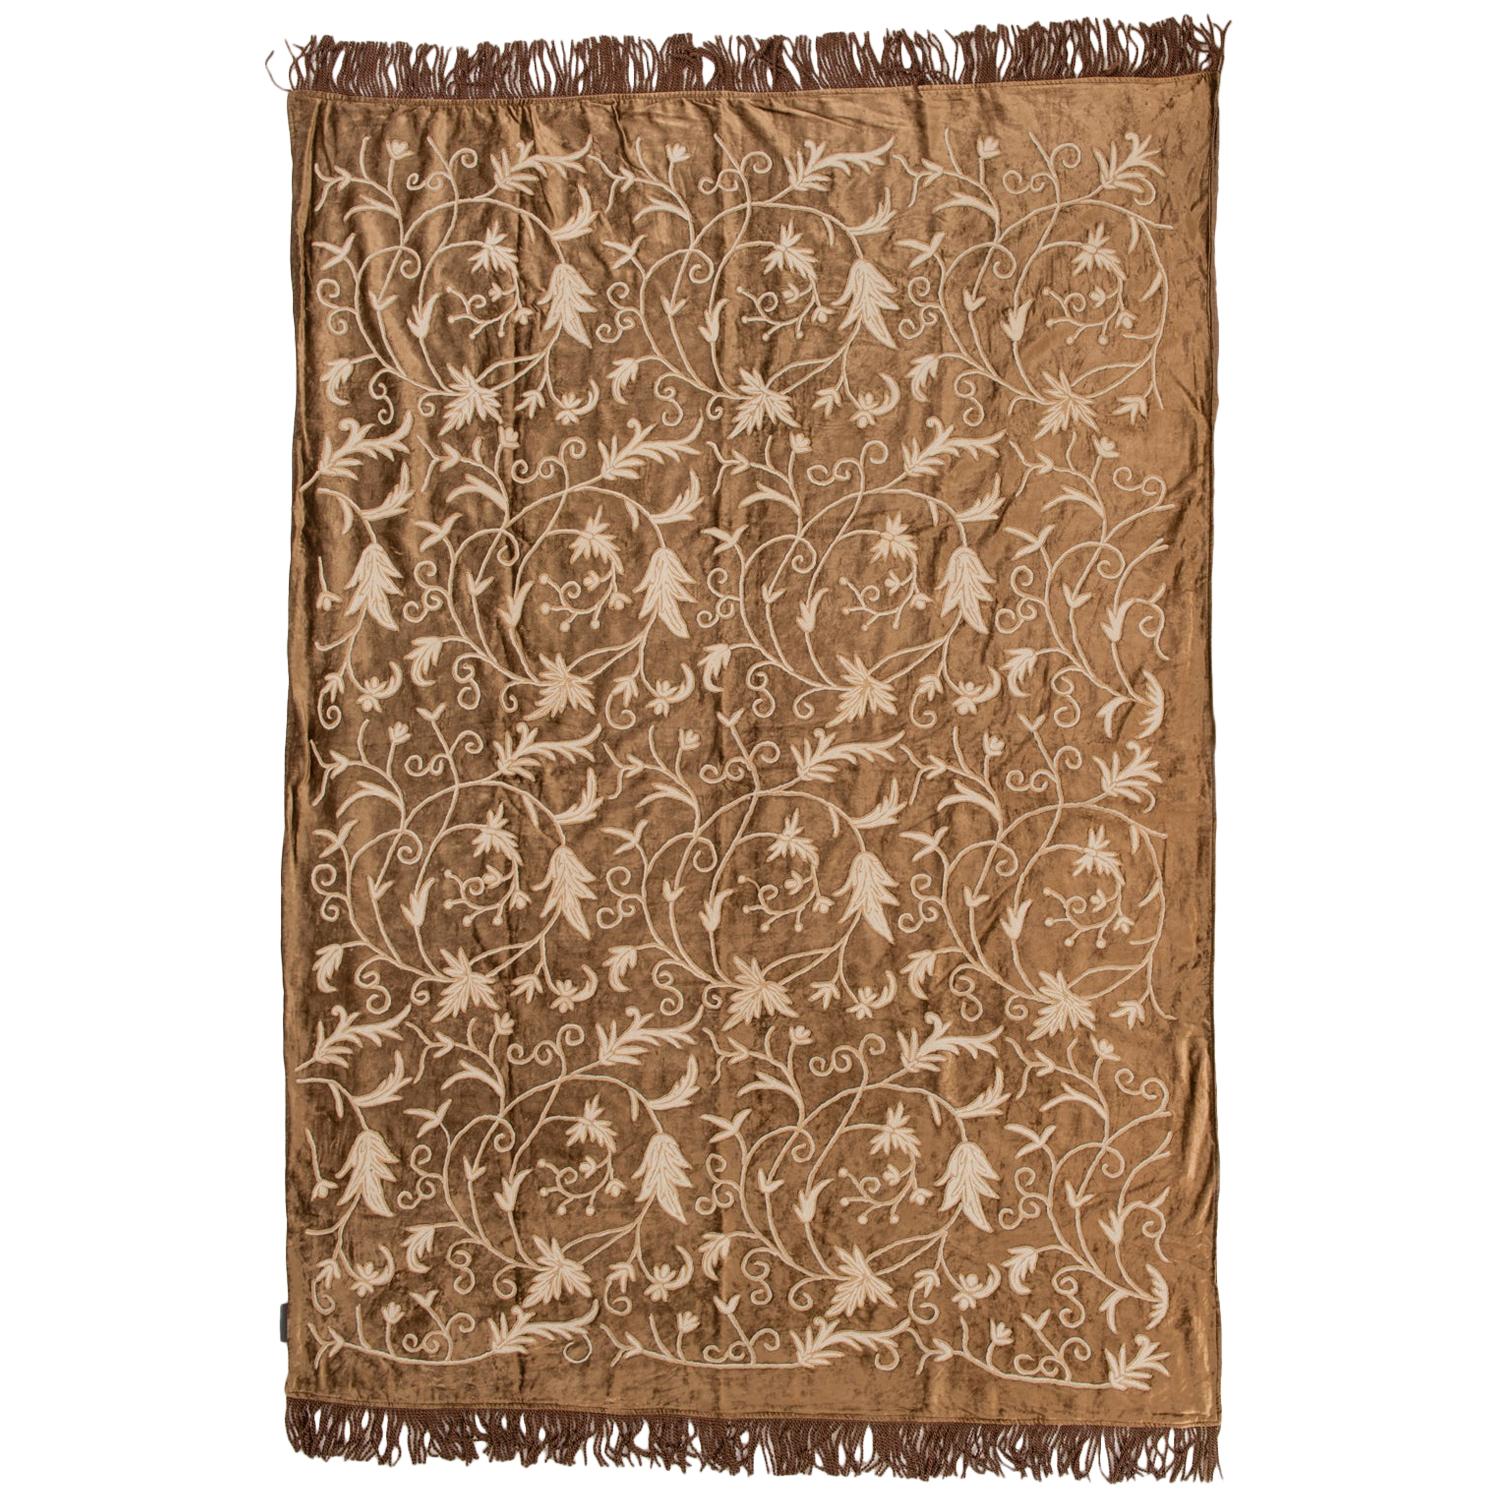 Elegant Embroidered Velvet Tablecloth or Plaid